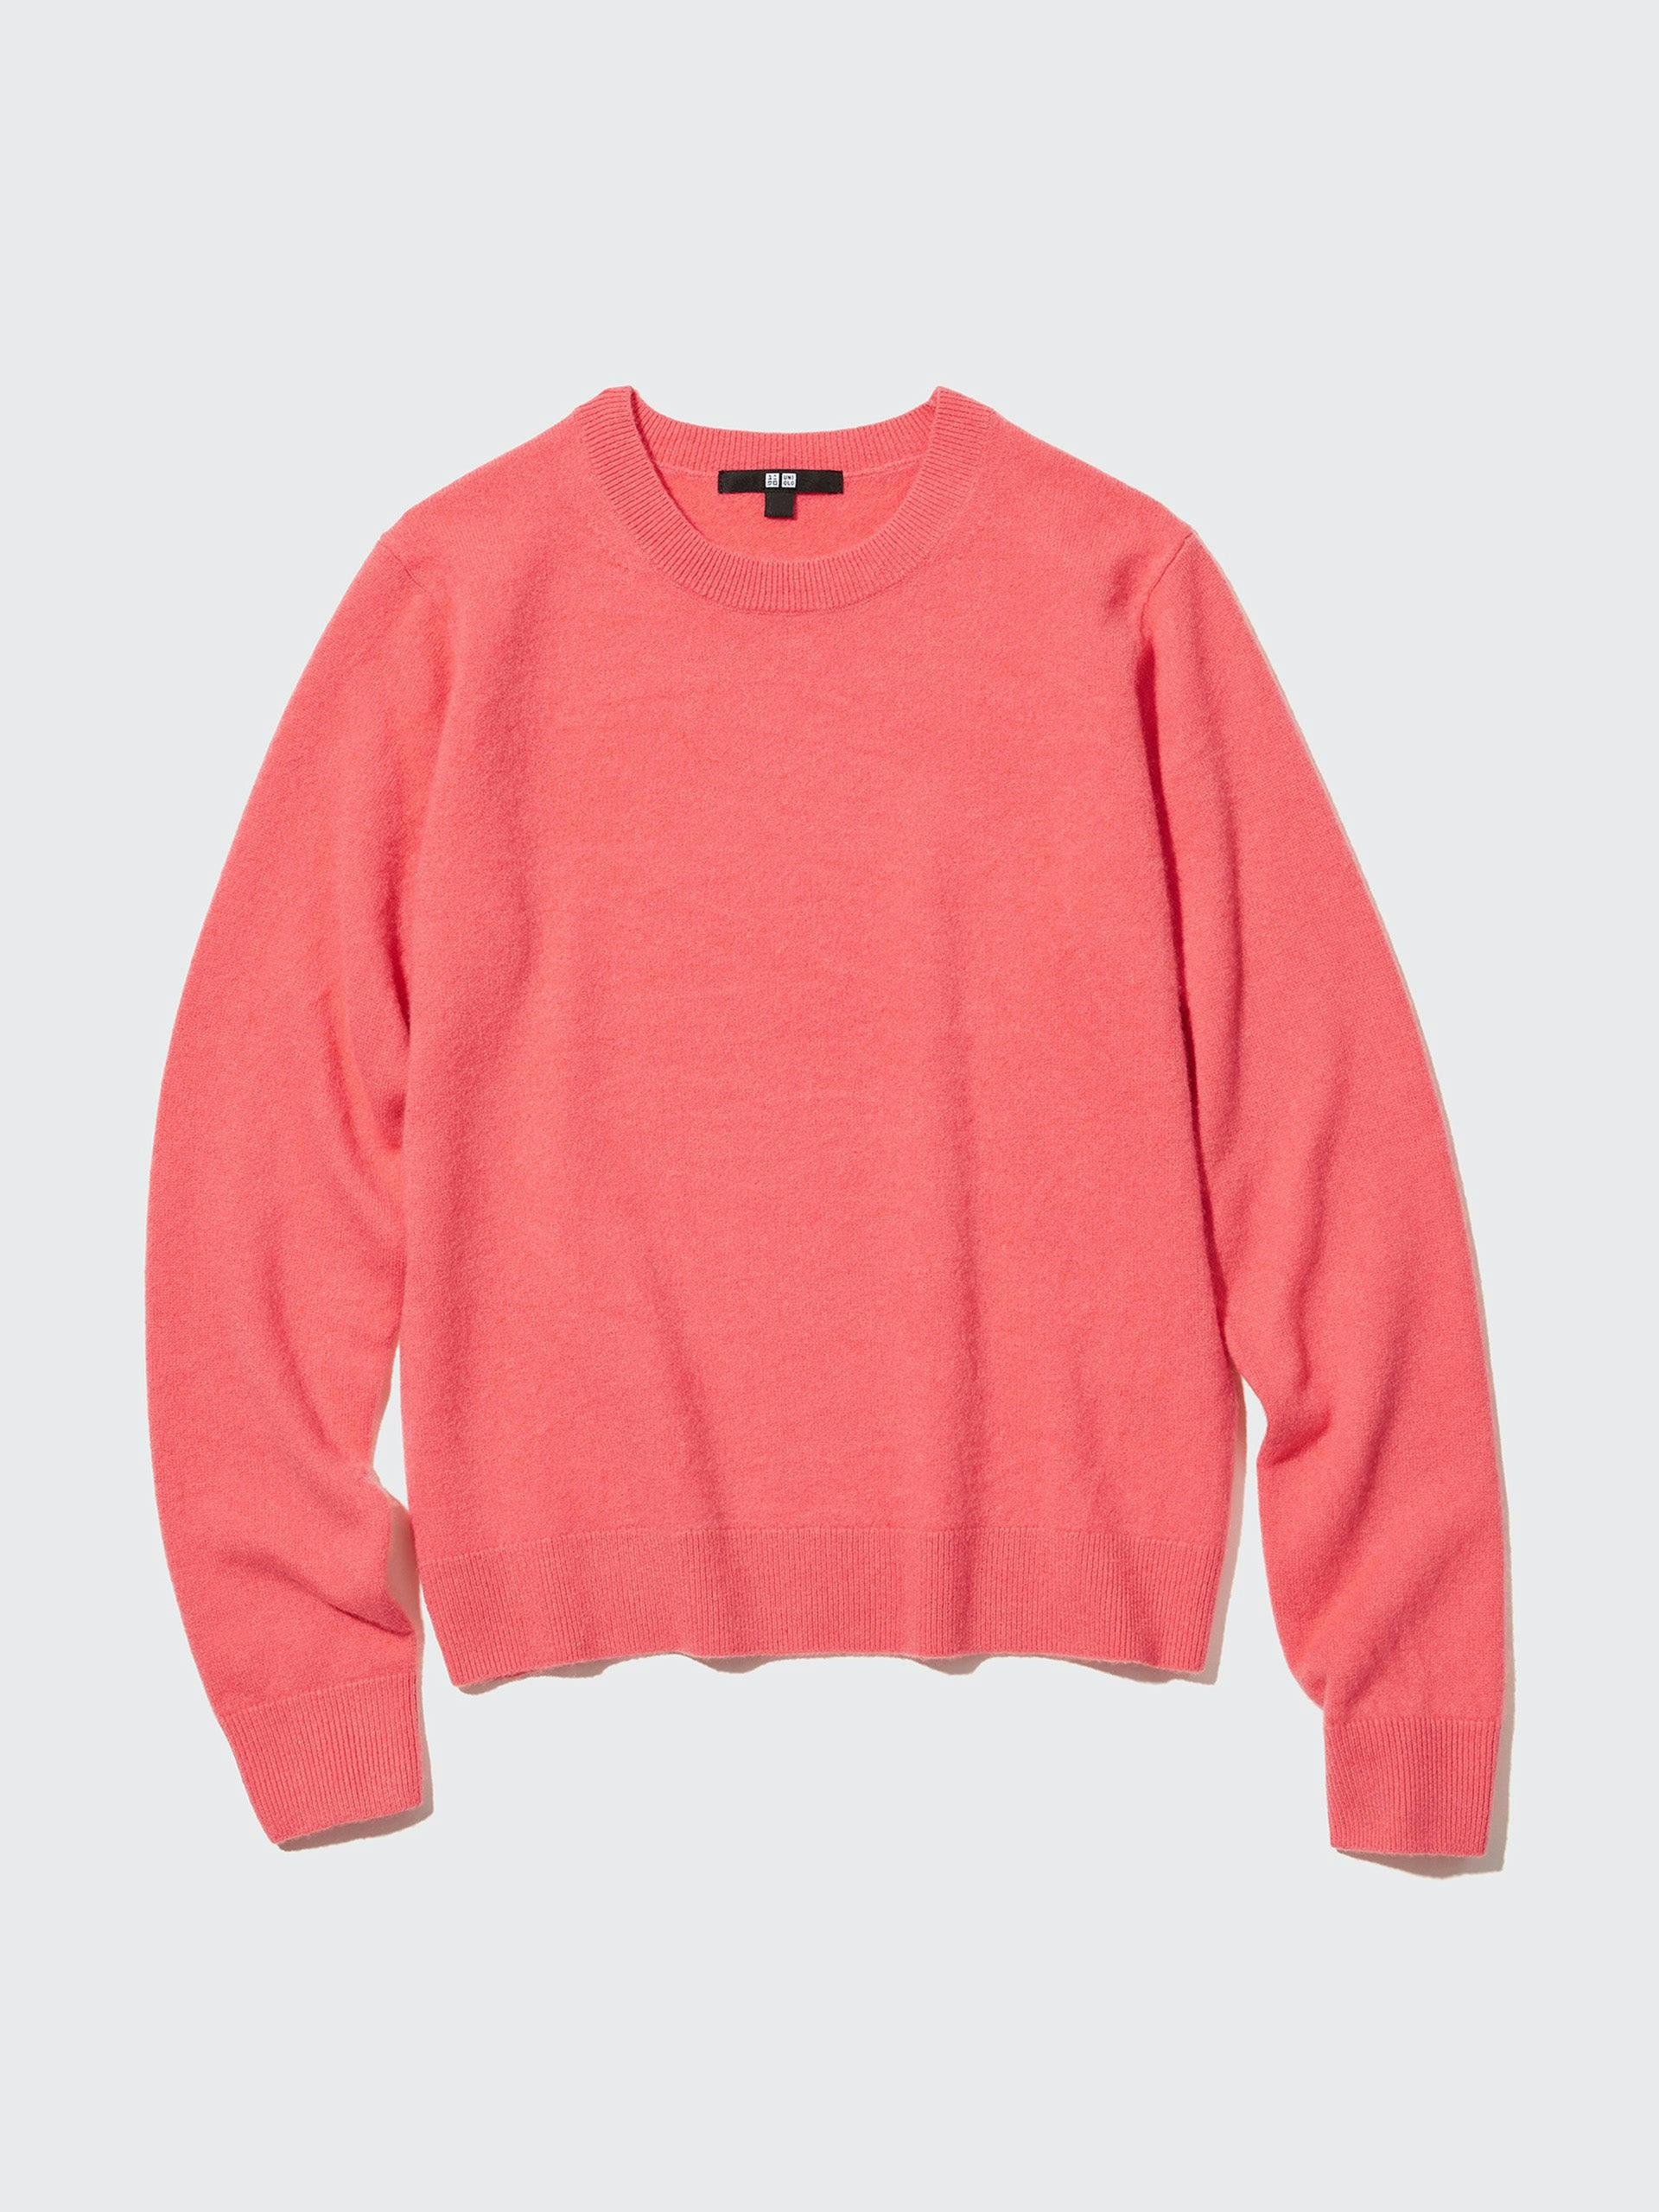 Cashmere jumper in bright pink